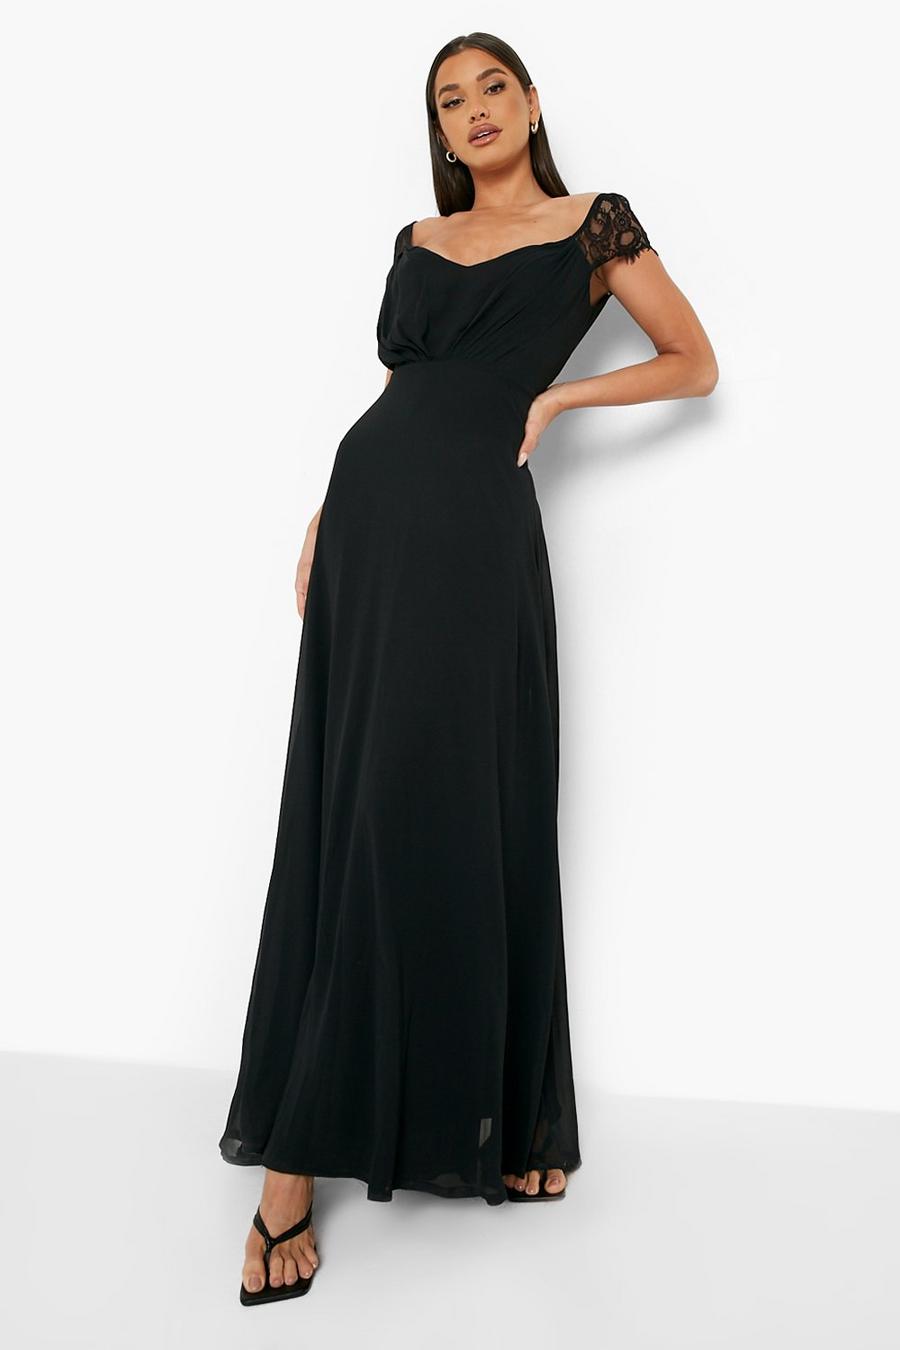 Black Lace Maxi Bridesmaid Dress